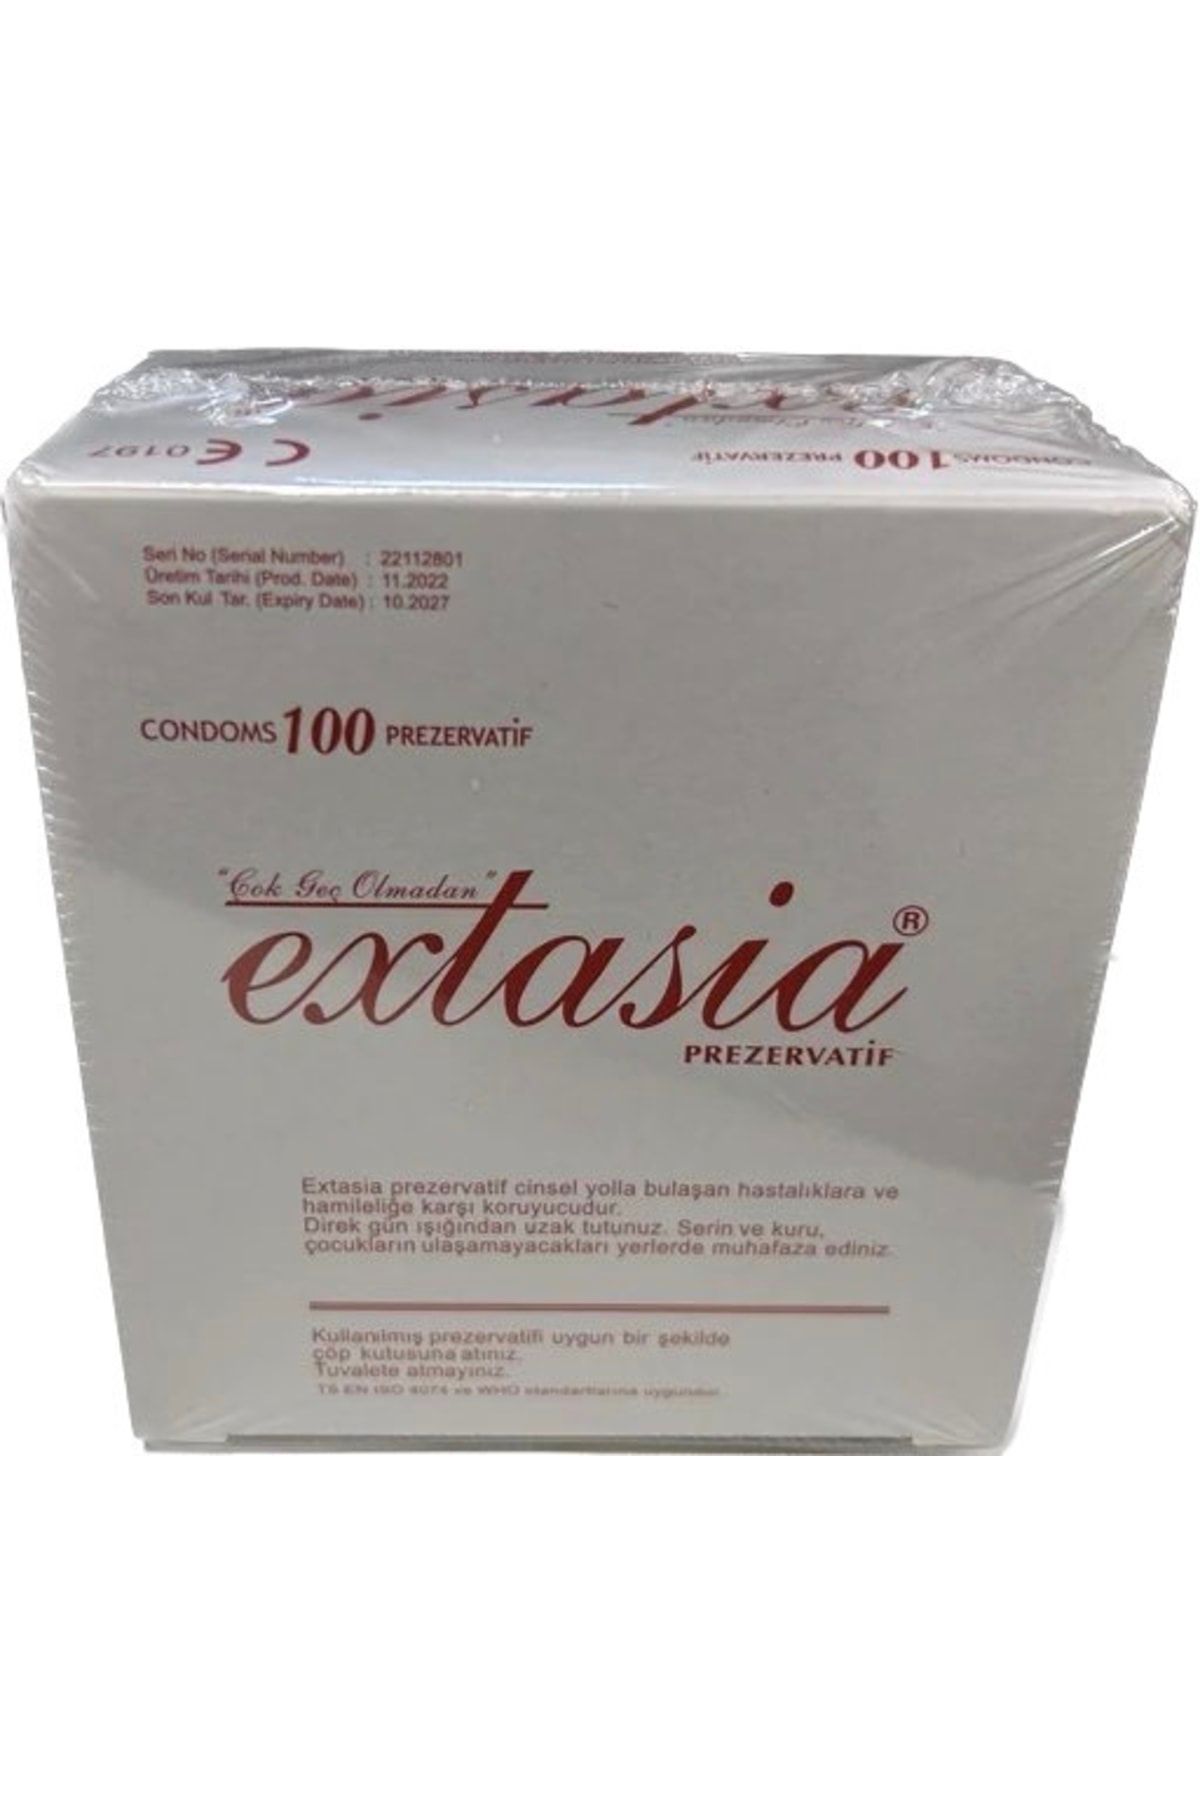 Extasia Prezervatif & Kondom 10 Kutu (1000 ADET) Gizli Gönderim